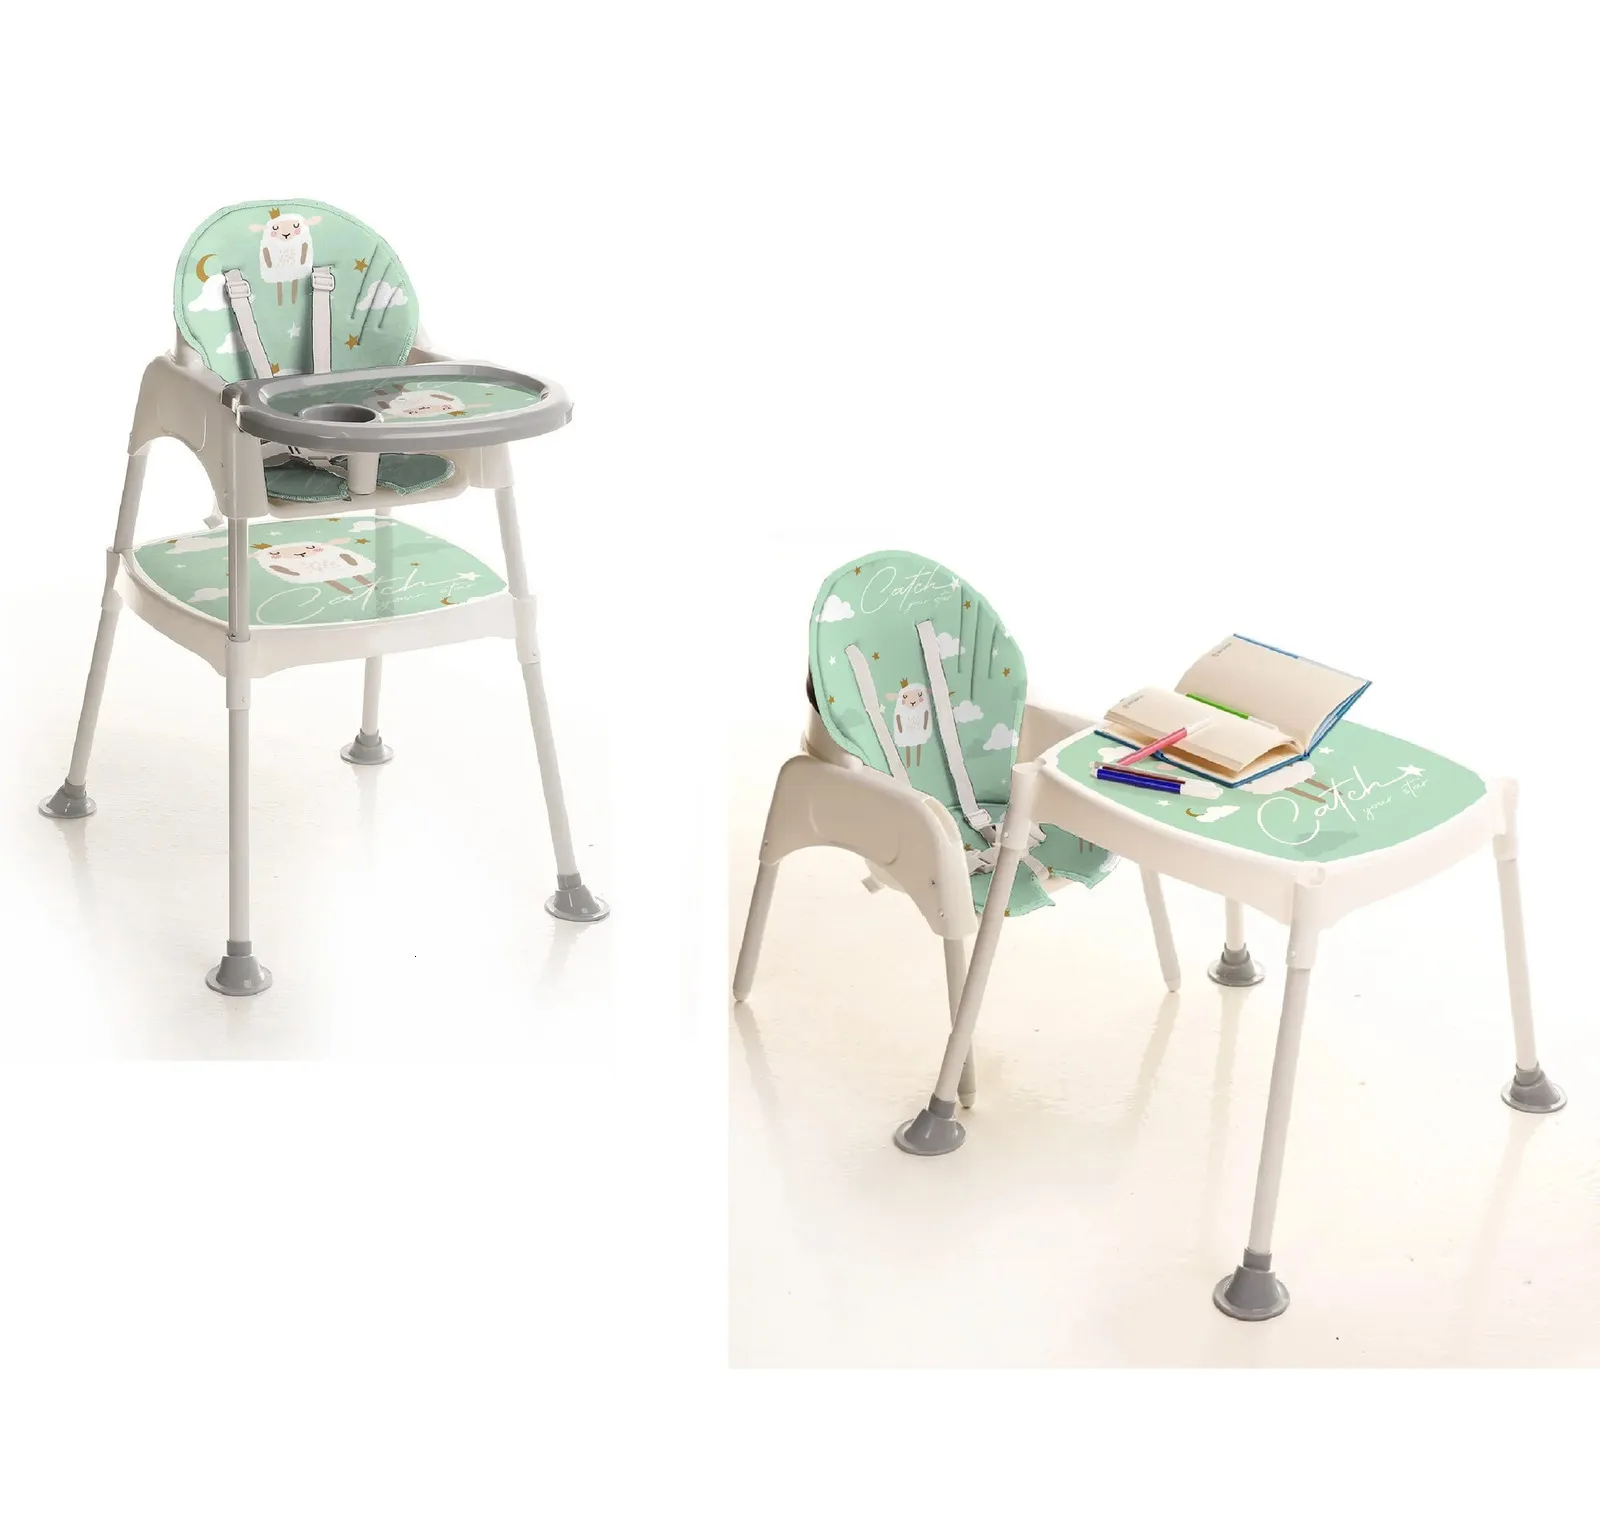 Hoge stoel babyvoeding voor stoel kinderen stoel op maat gemaakte plastic kleurverpakkingsmateriaal oorsprong kalkoen 240401